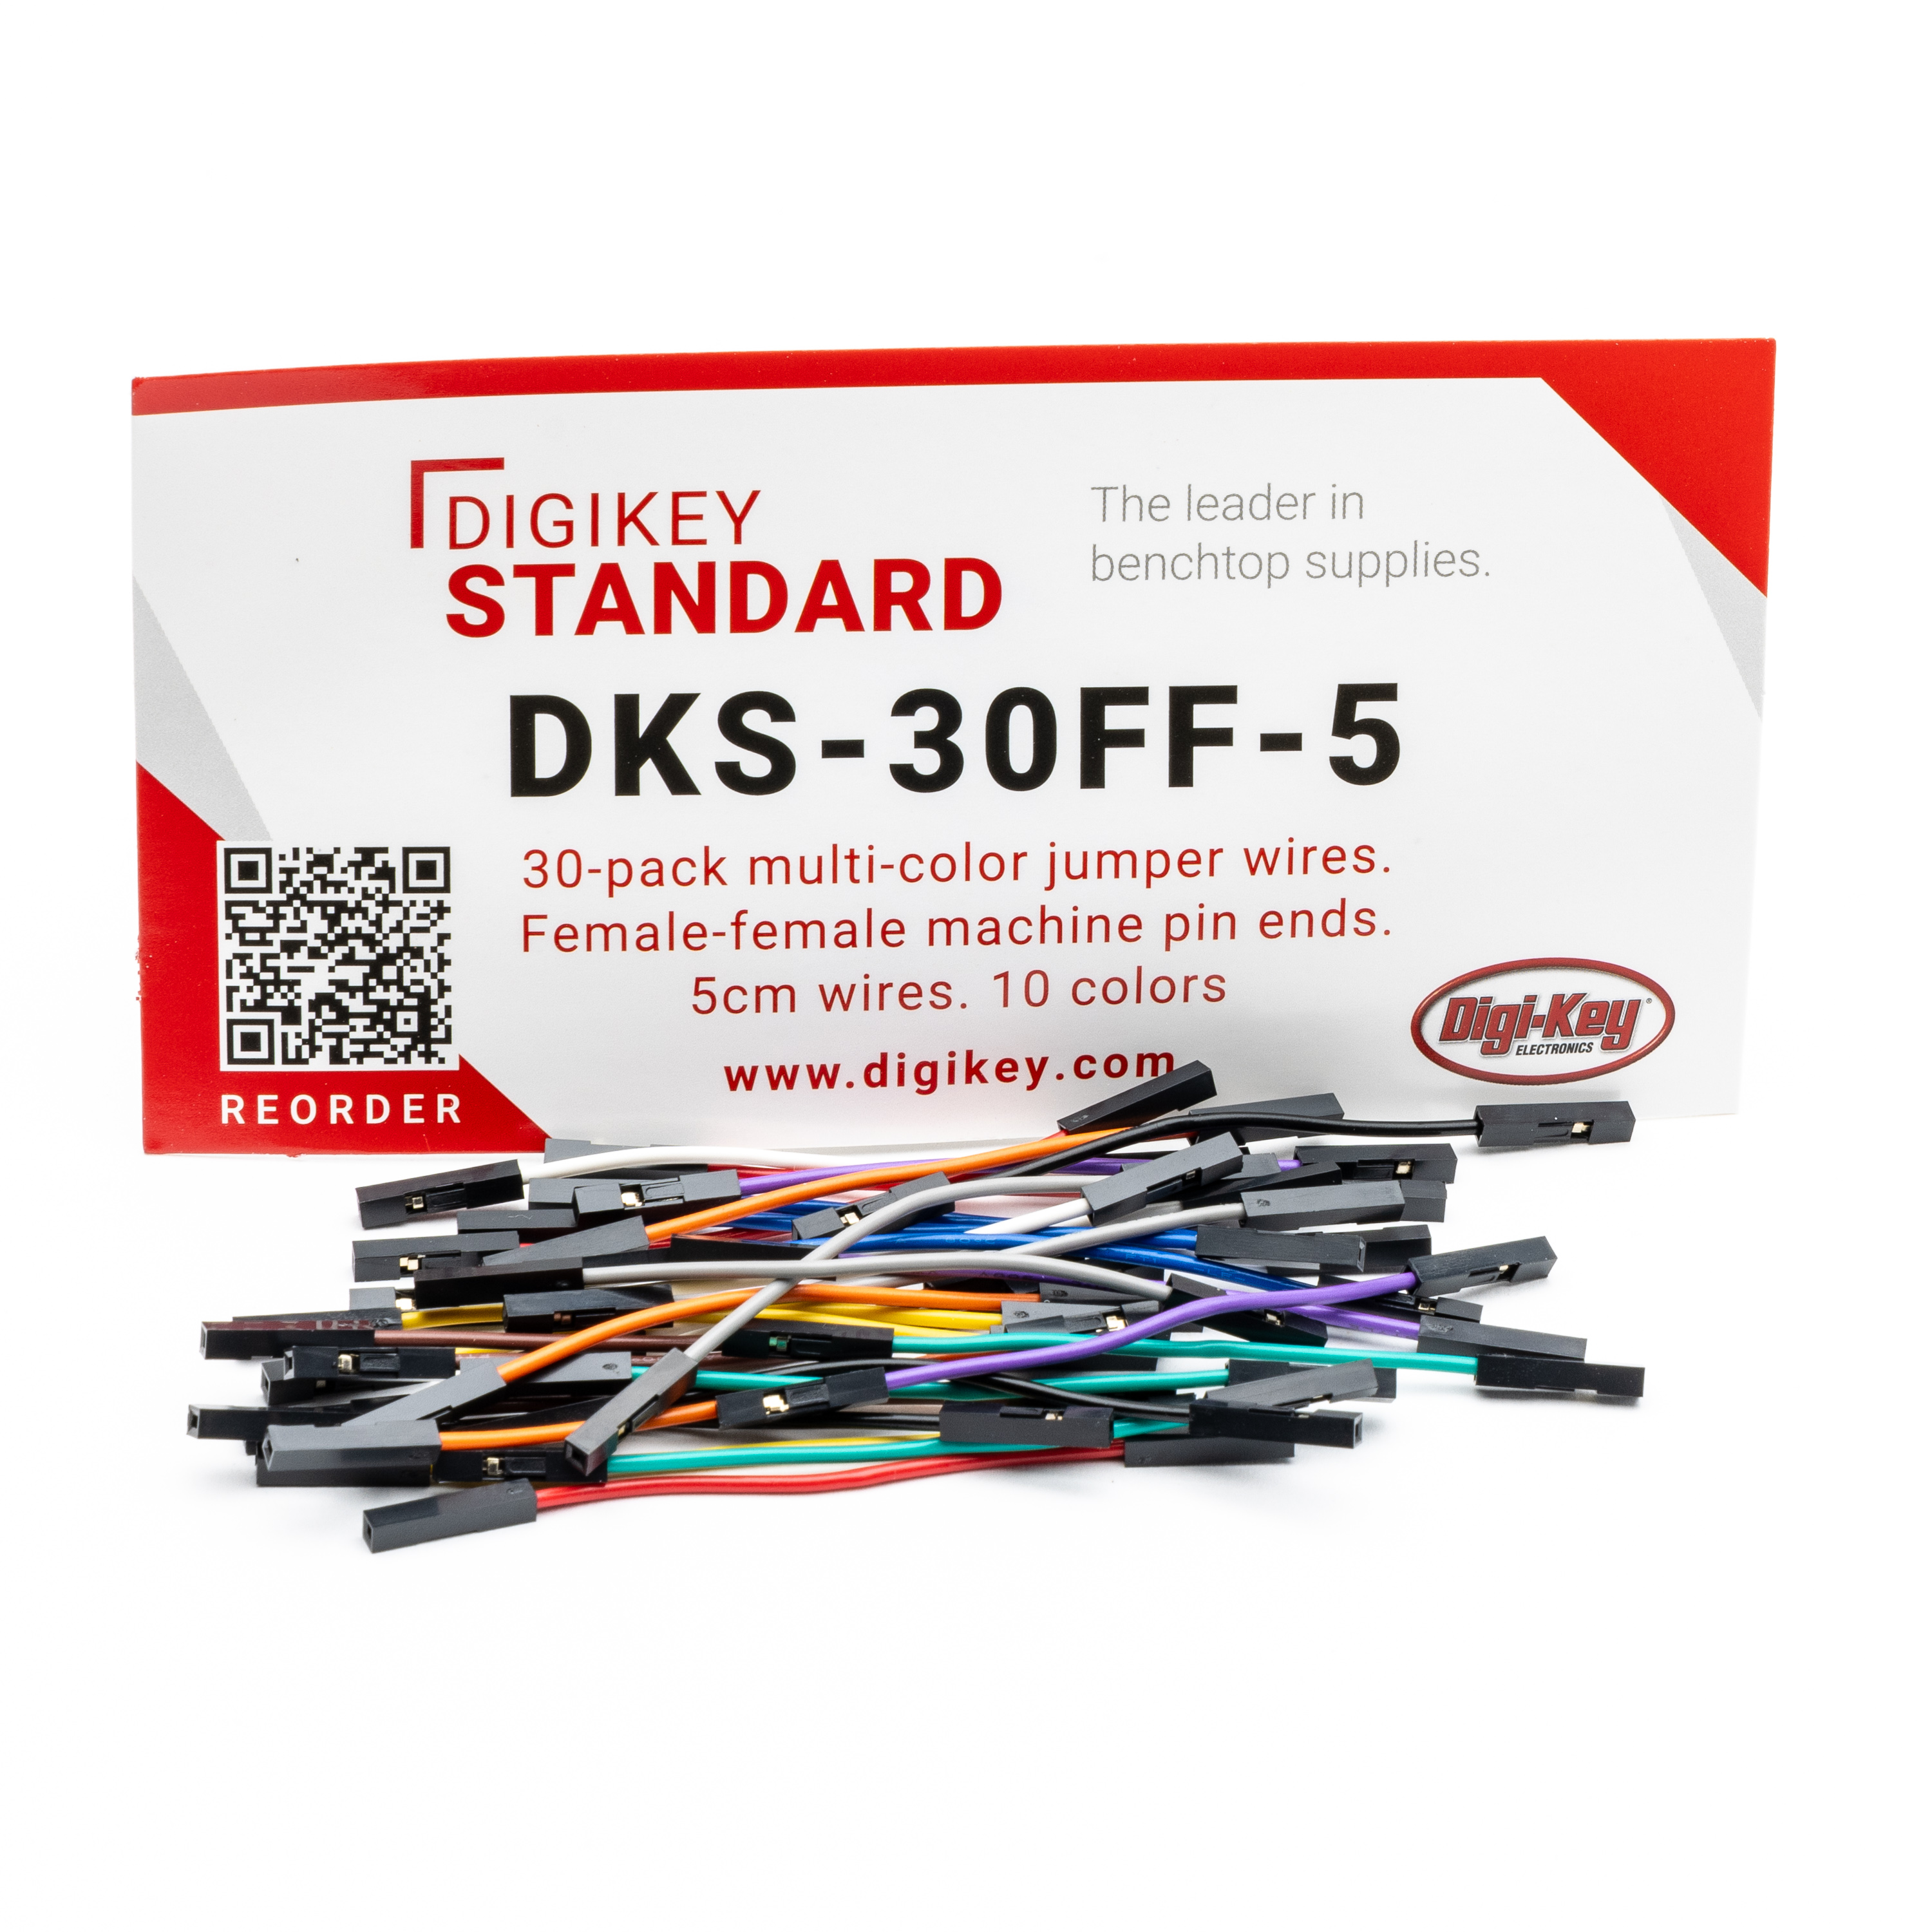 DKS-30FF-5